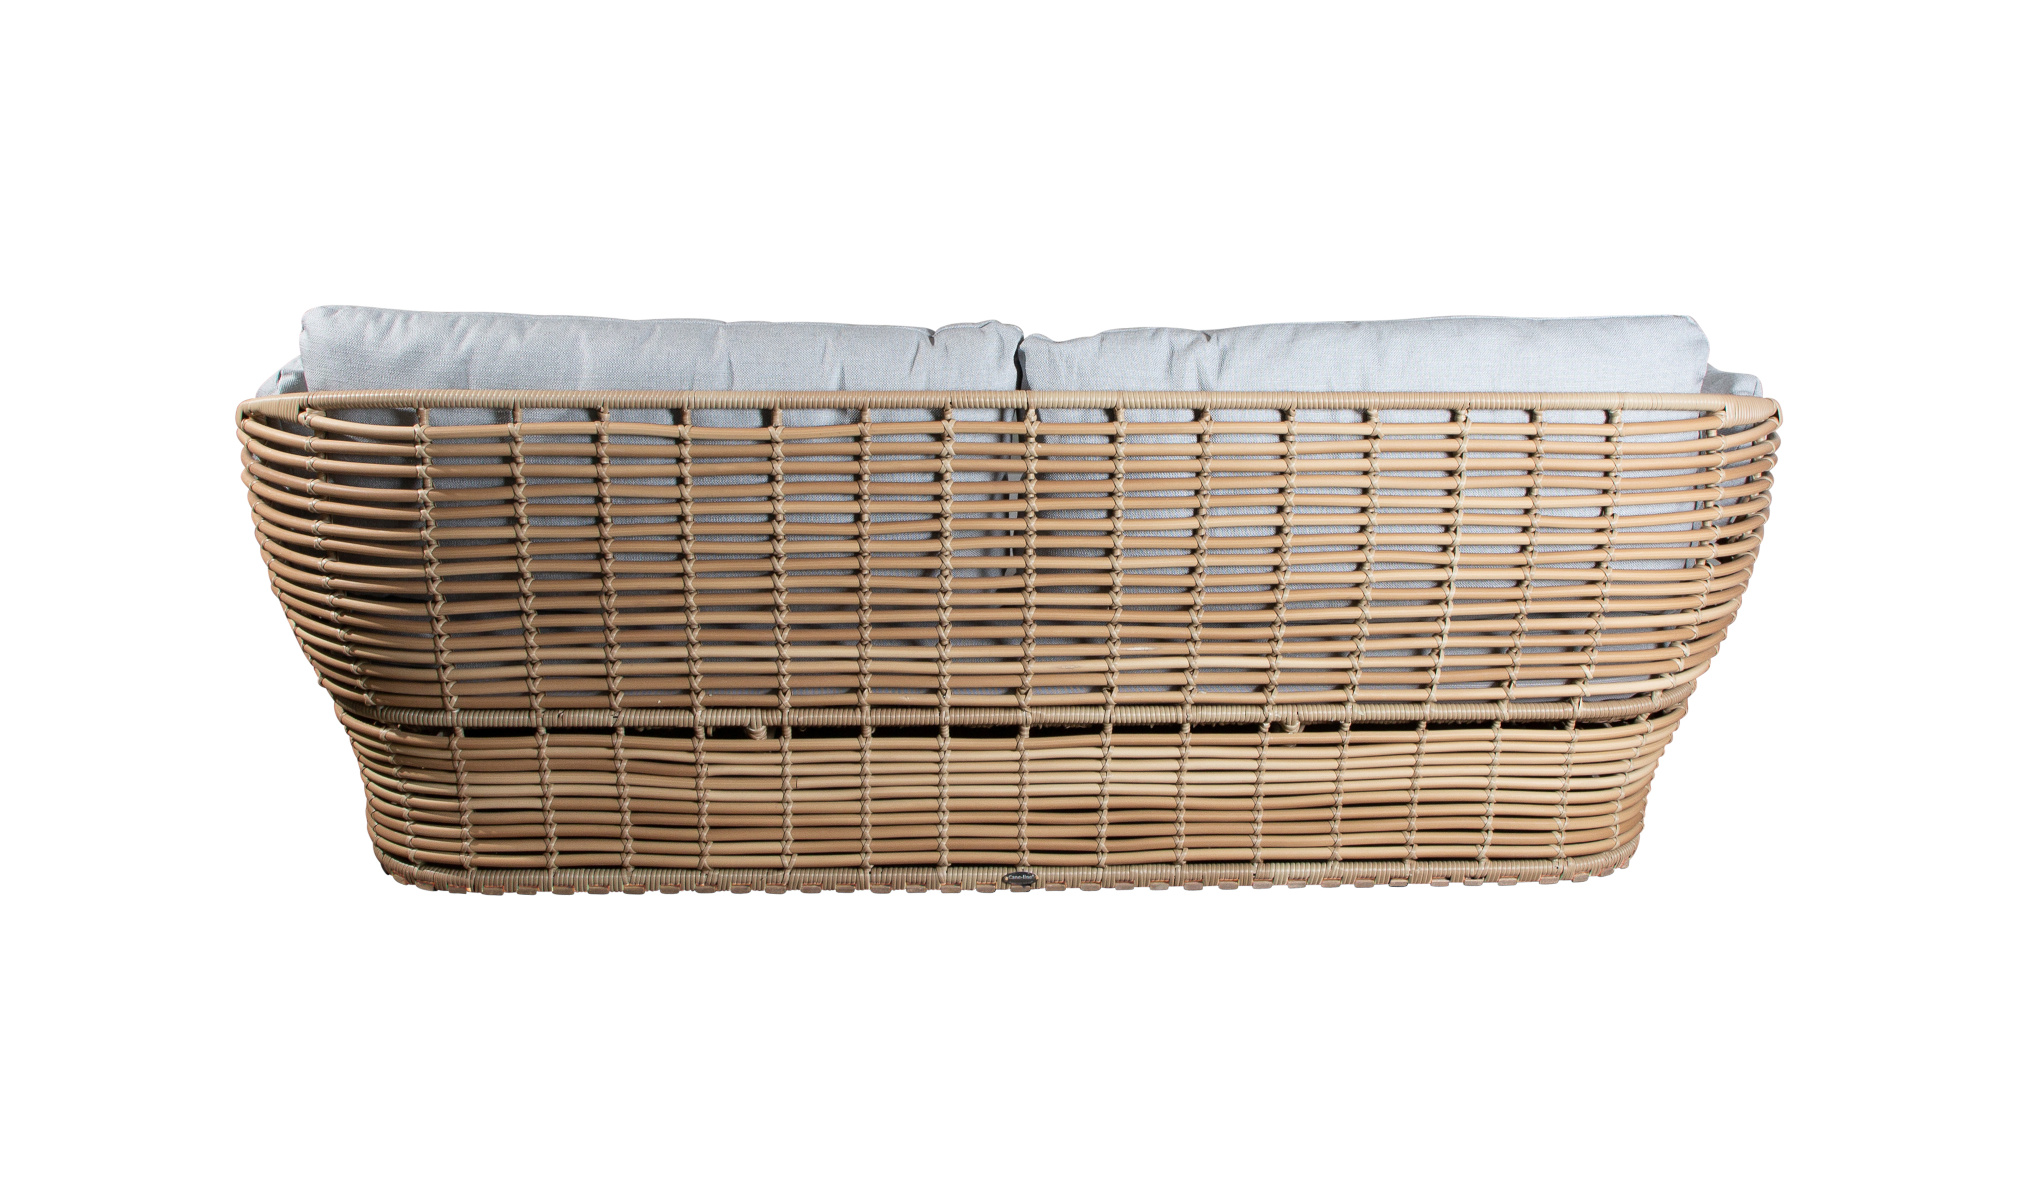 Basket Gartensofa 2-Sitzer, graphit / grau